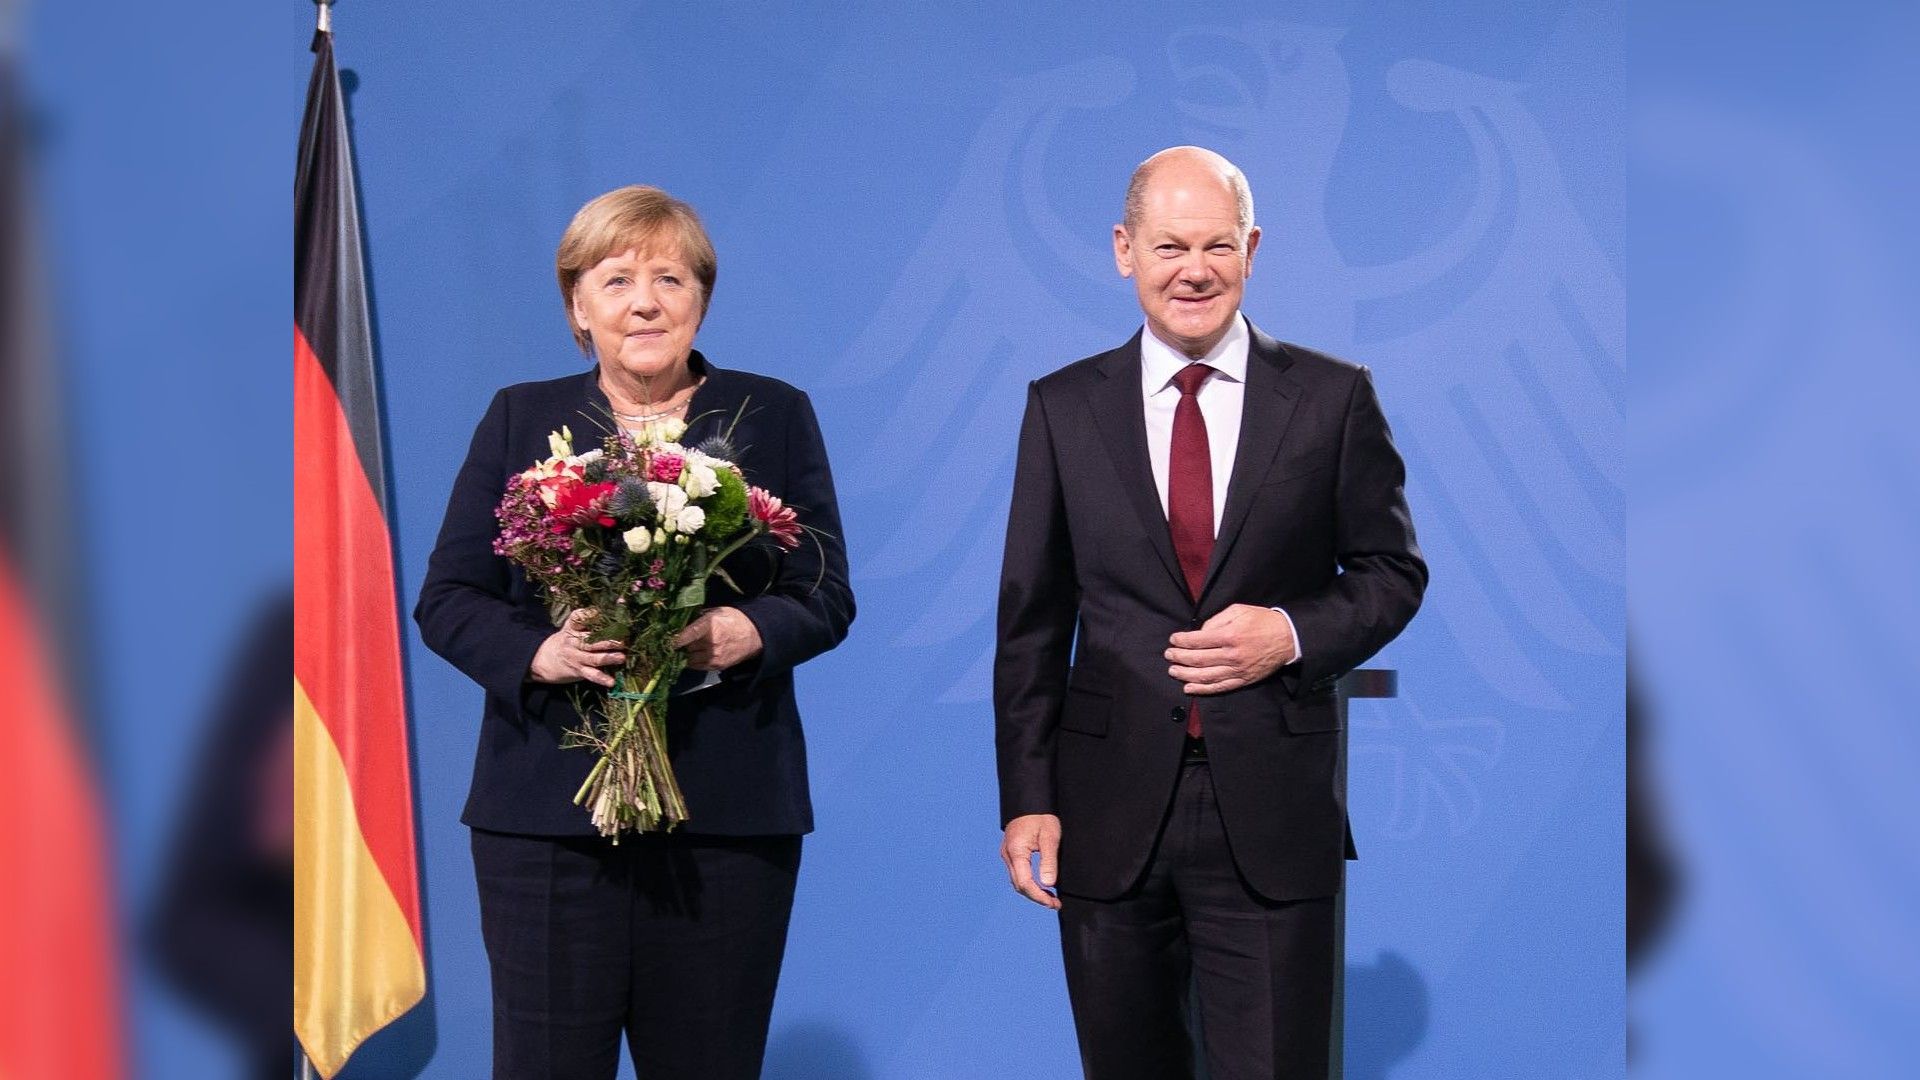 Angela Merkel and Olaf Scholz